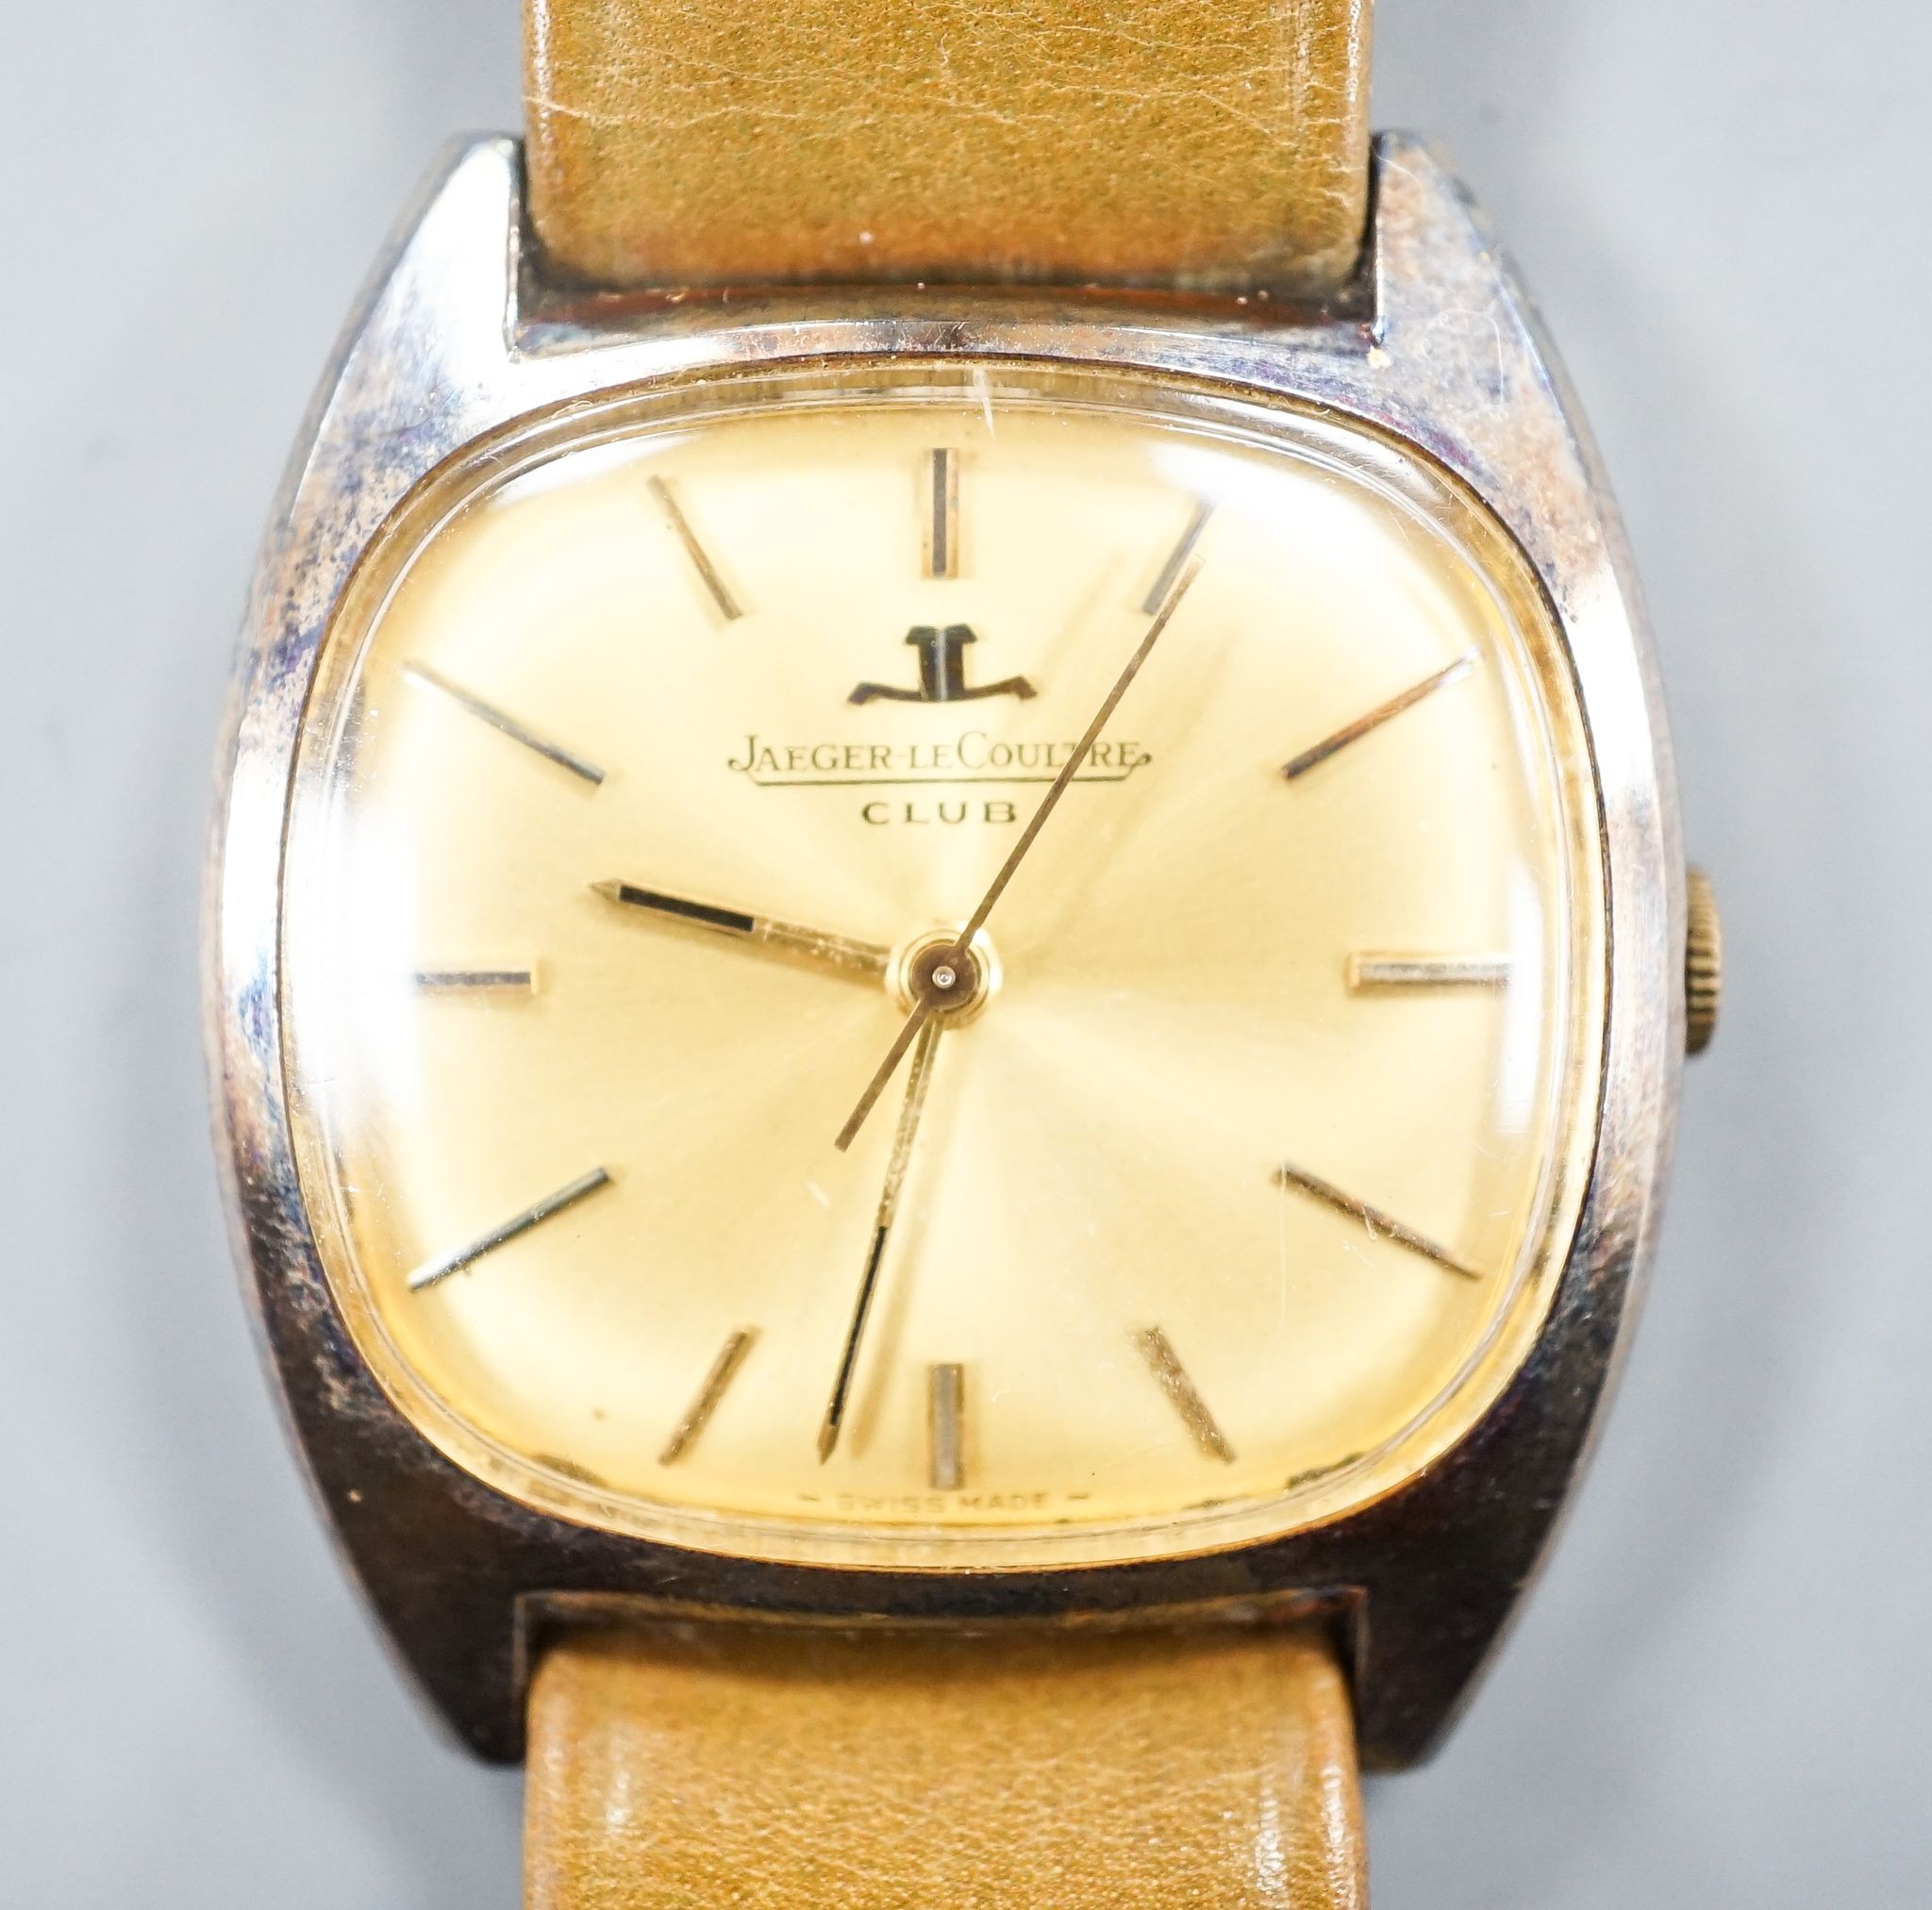 A gentleman's stainless steel Jaeger LeCoultre Club manual wind wrist watch, on associated strap, case diameter 32mm.